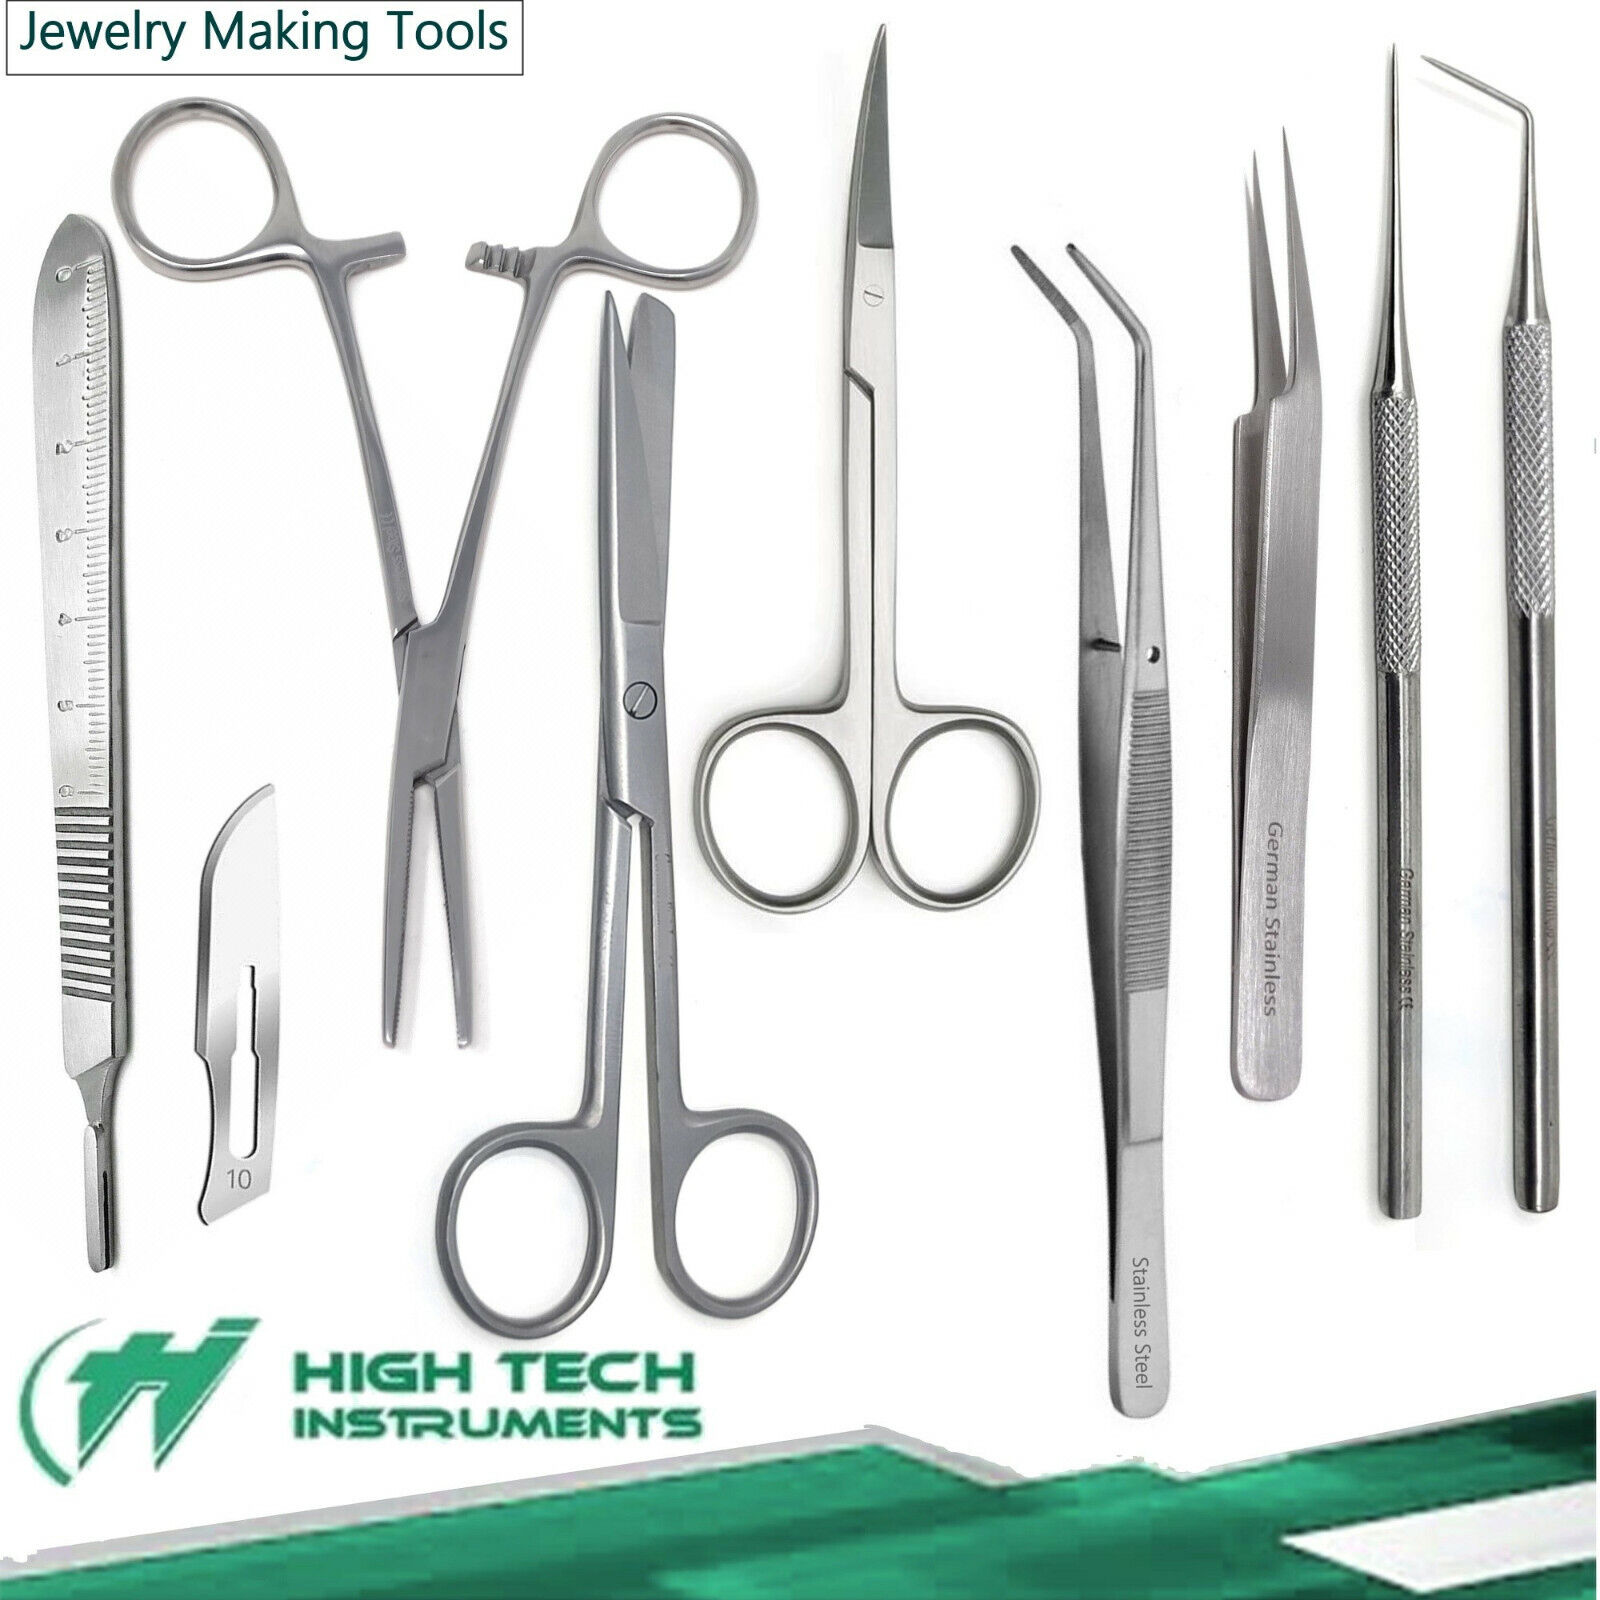 13 Pcs Jewelry Making Kit Pliers Repair Tool Craft Supplies Starter Fixing Set hti brand Does Not Apply - фотография #2